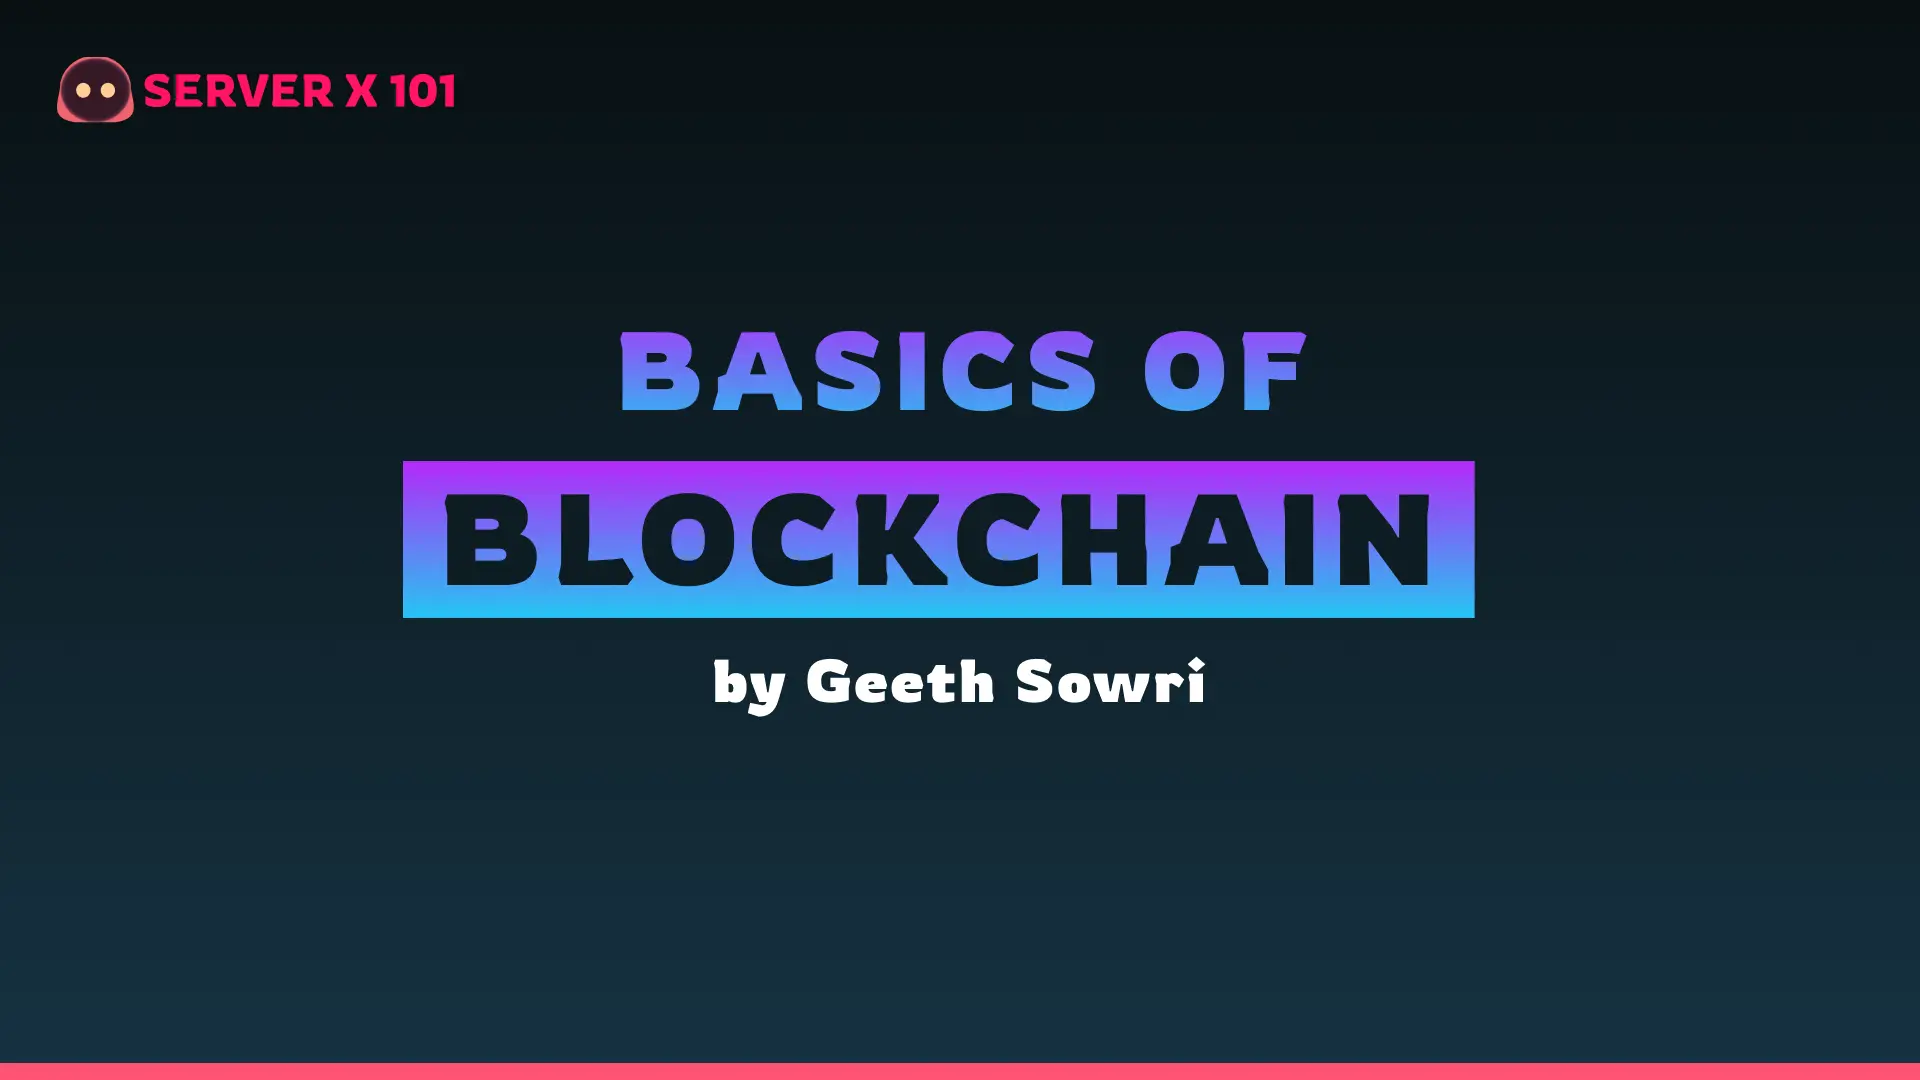 Basics of Blockchain